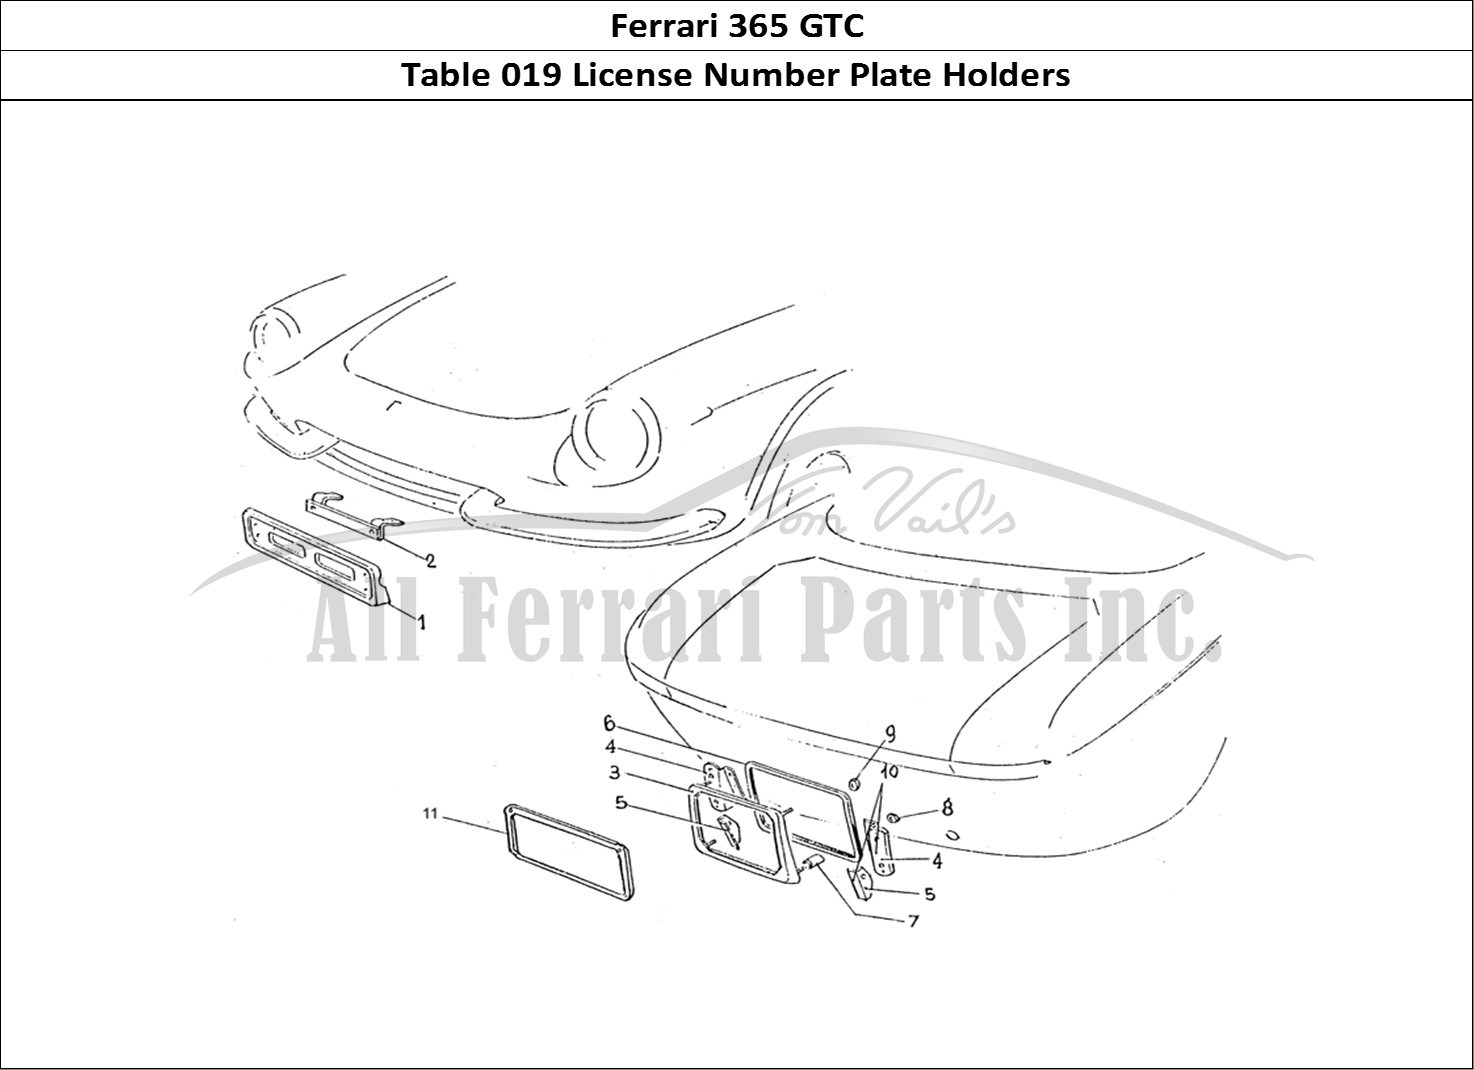 Ferrari Parts Ferrari 330 GTC (Coachwork) Page 019 Front & Rear number plate